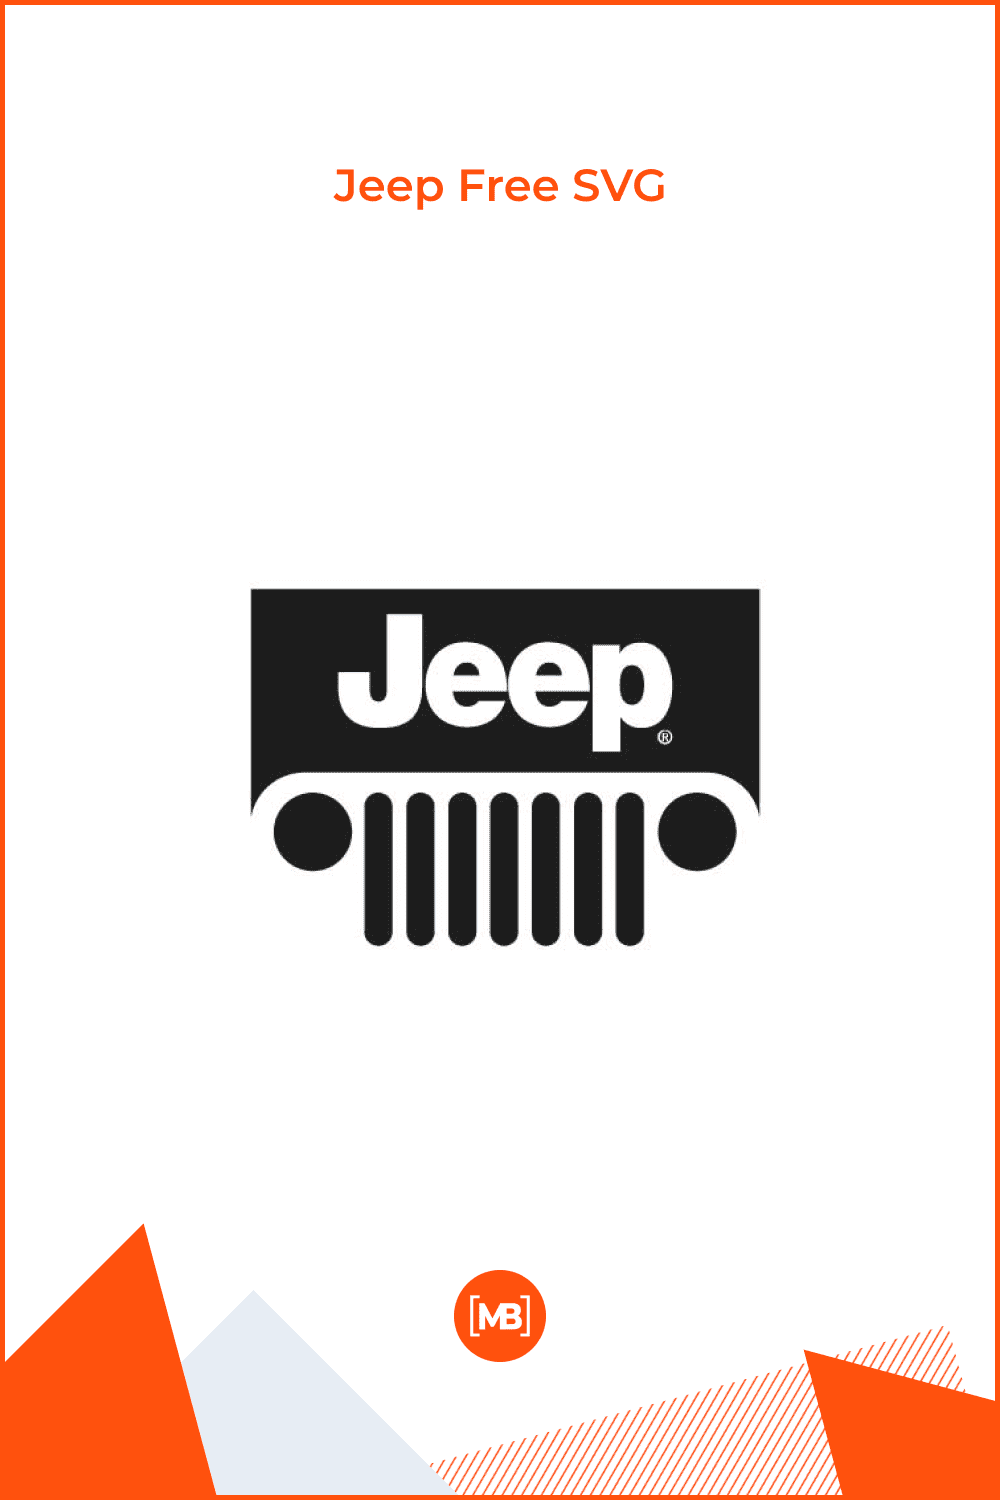 Jeep Free SVG.